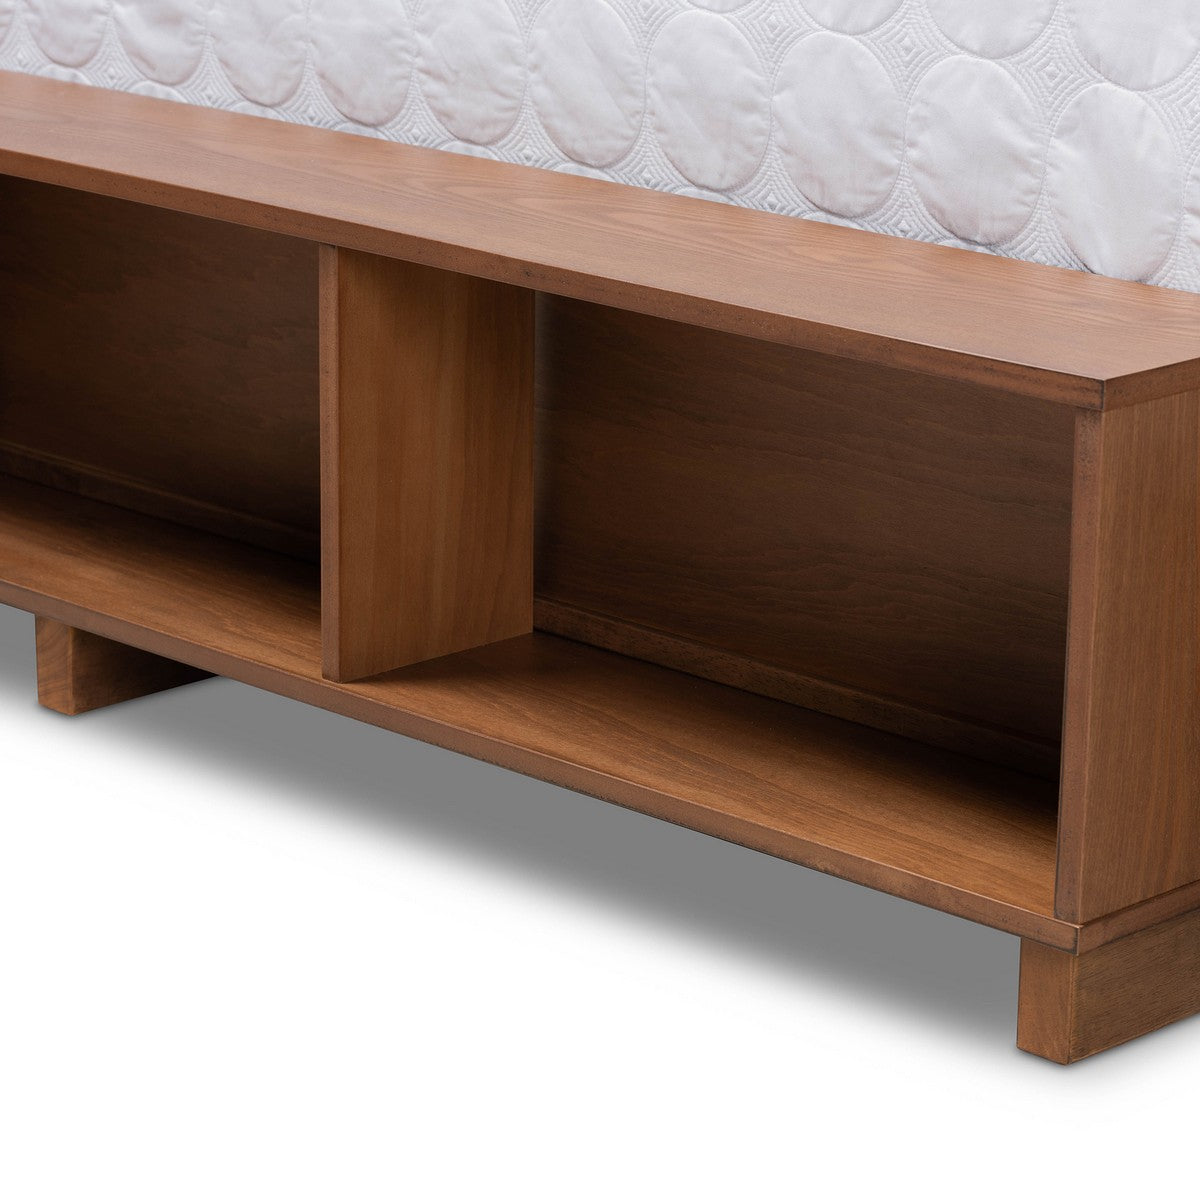 Baxton Studio Alba Modern Transitional Ash Walnut Brown Finished Wood Full Size 4-Drawer Platform Storage Bed with Built-In Shelves